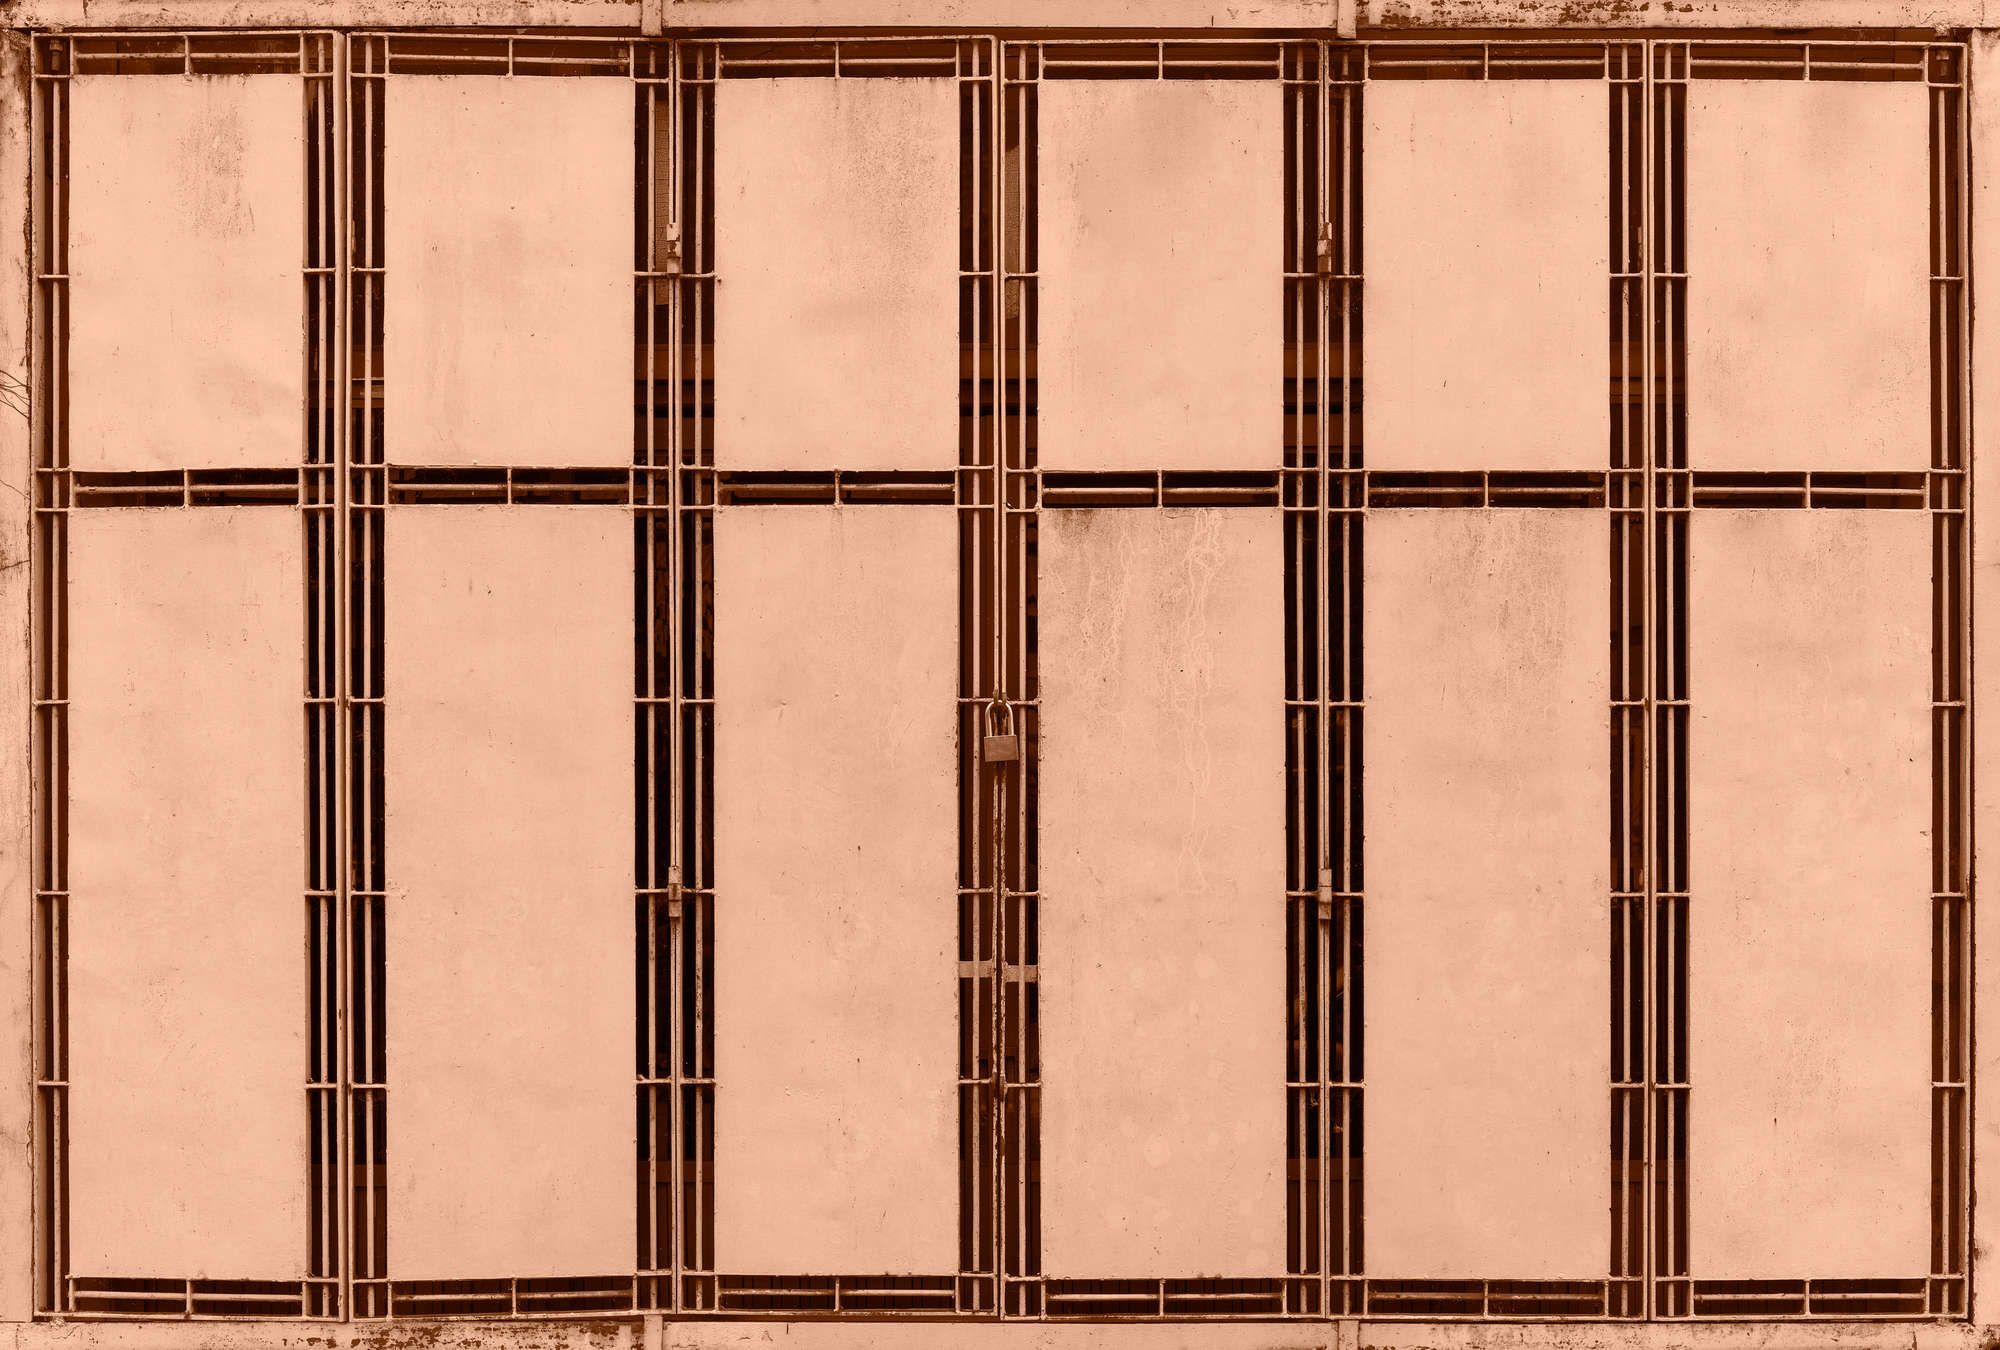             Digital behang »jaipur« - Close-up van een zalmkleurig metalen hek - Matte, Gladde vliesstof
        